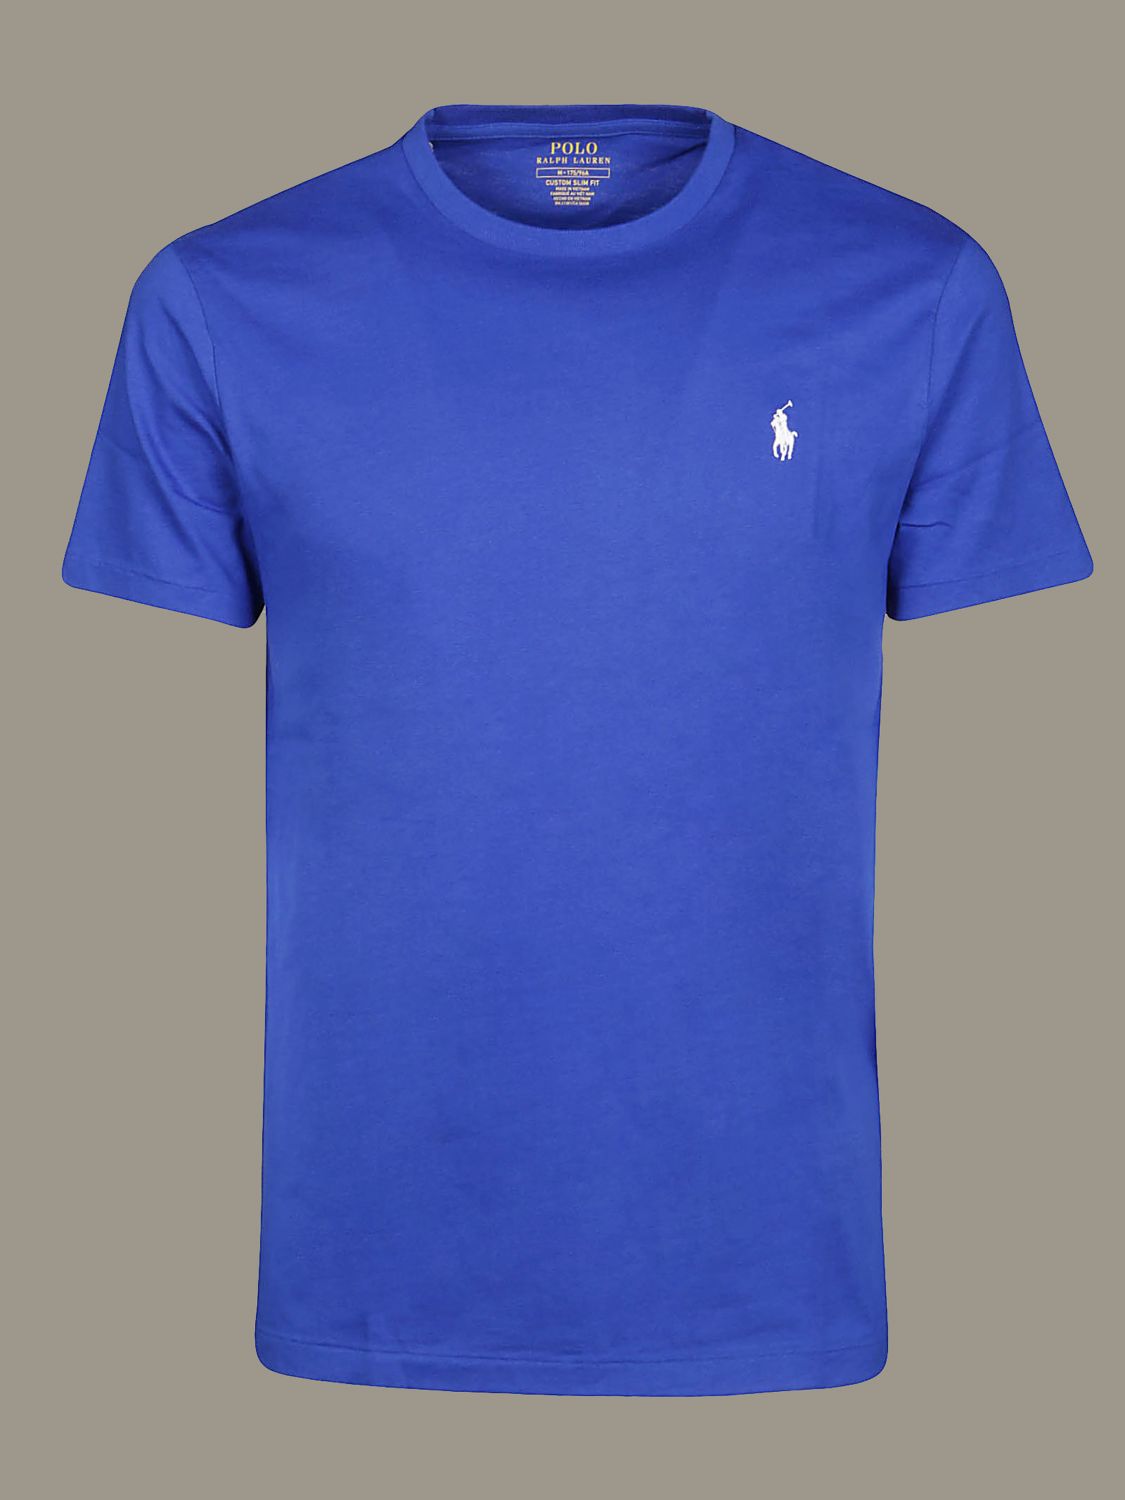 POLO RALPH LAUREN: crew neck t-shirt with logo - Royal Blue | Polo Ralph  Lauren t-shirt 710671438 online on 